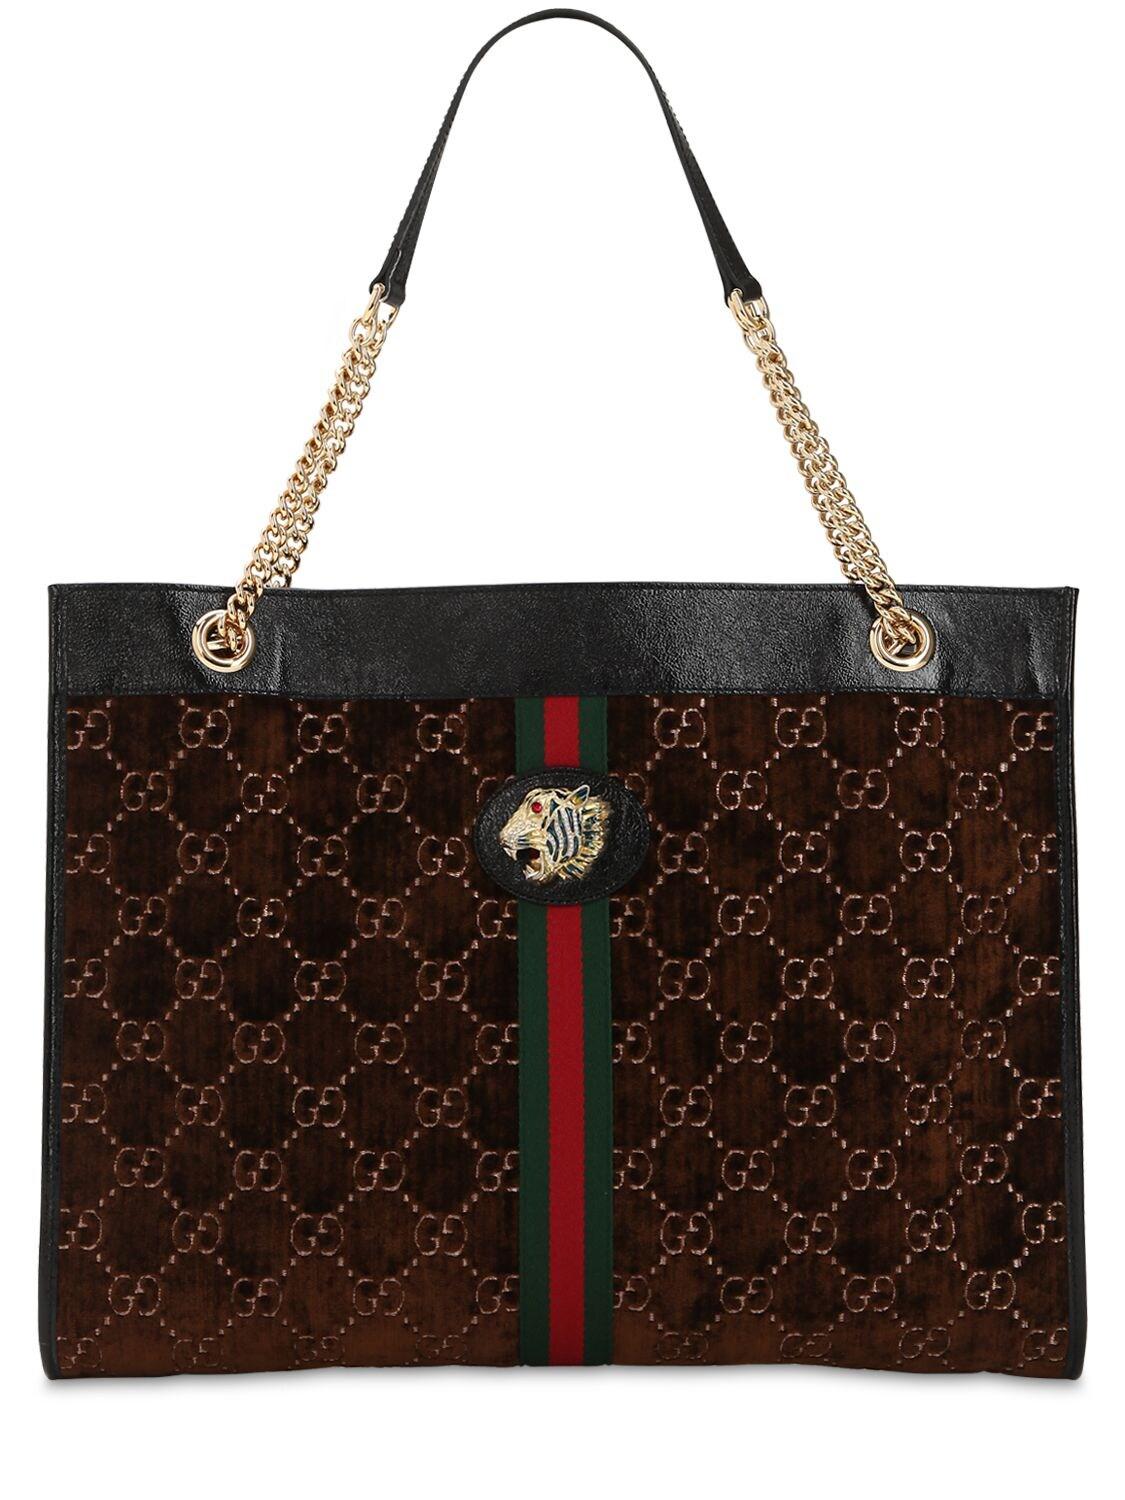 Gucci Large Rajah Gg Velvet Tote Bag in Brown - Lyst